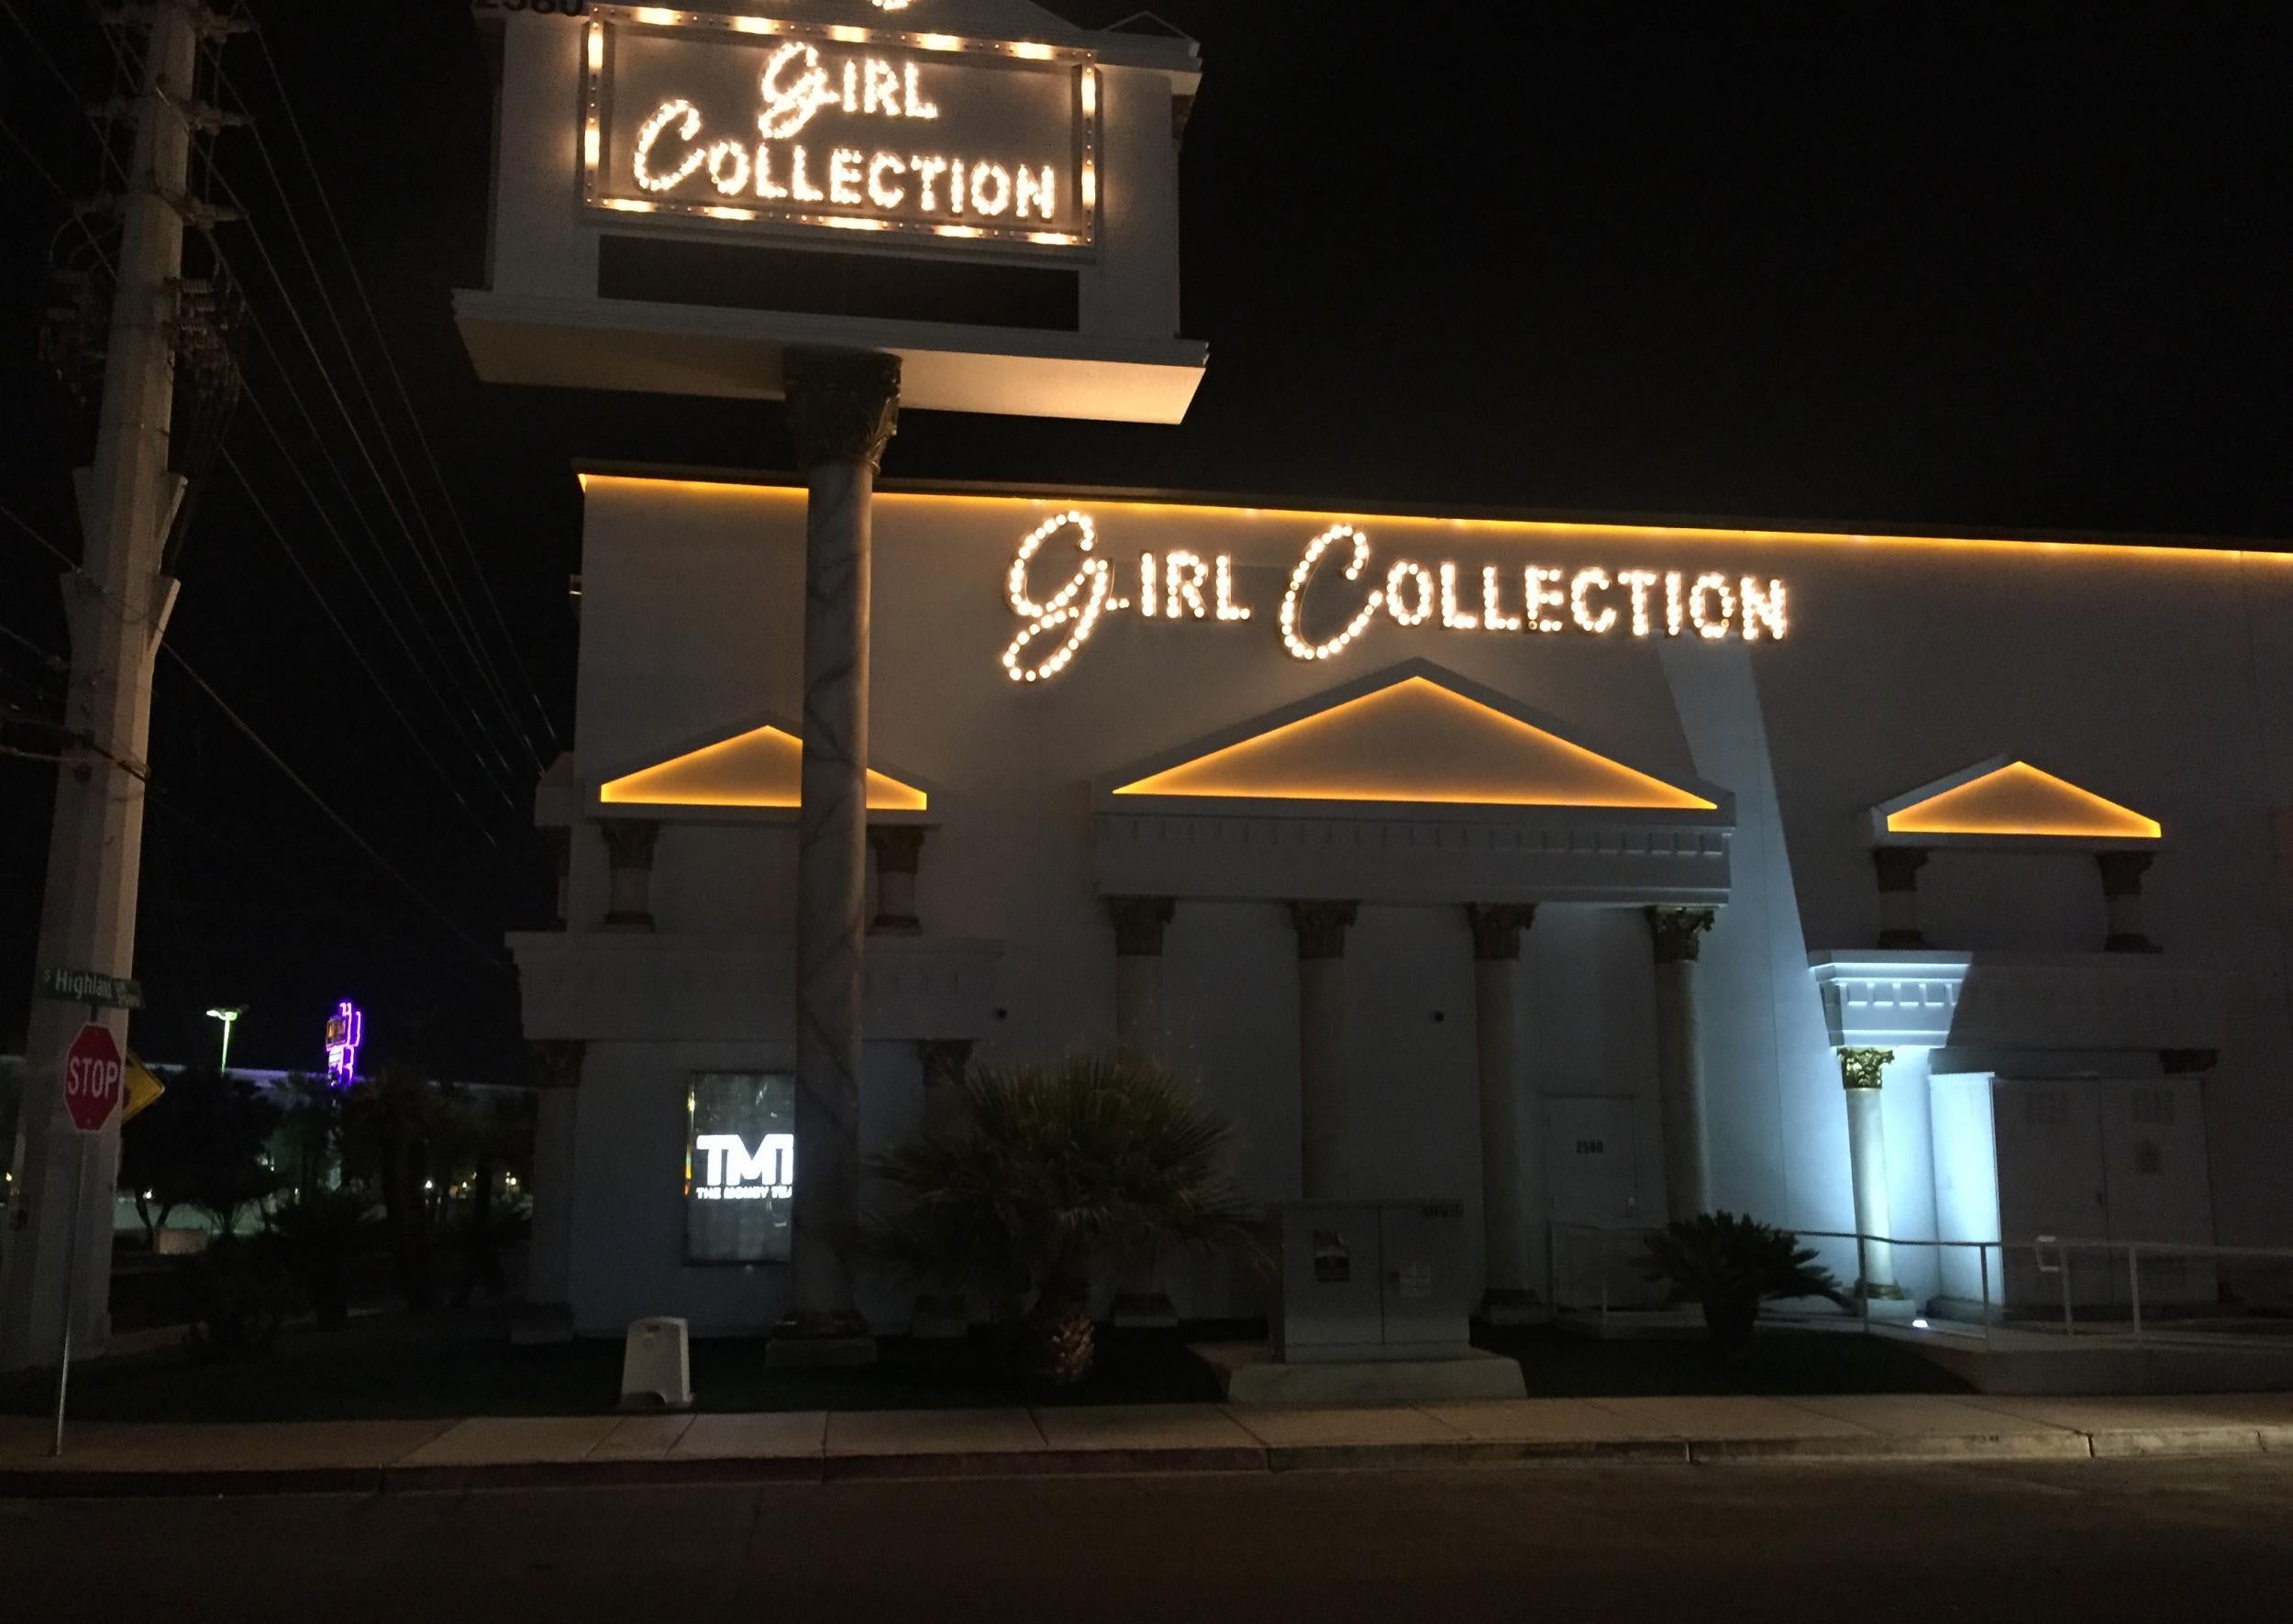 Floyd Mayweather's Girl Collection gentleman's club